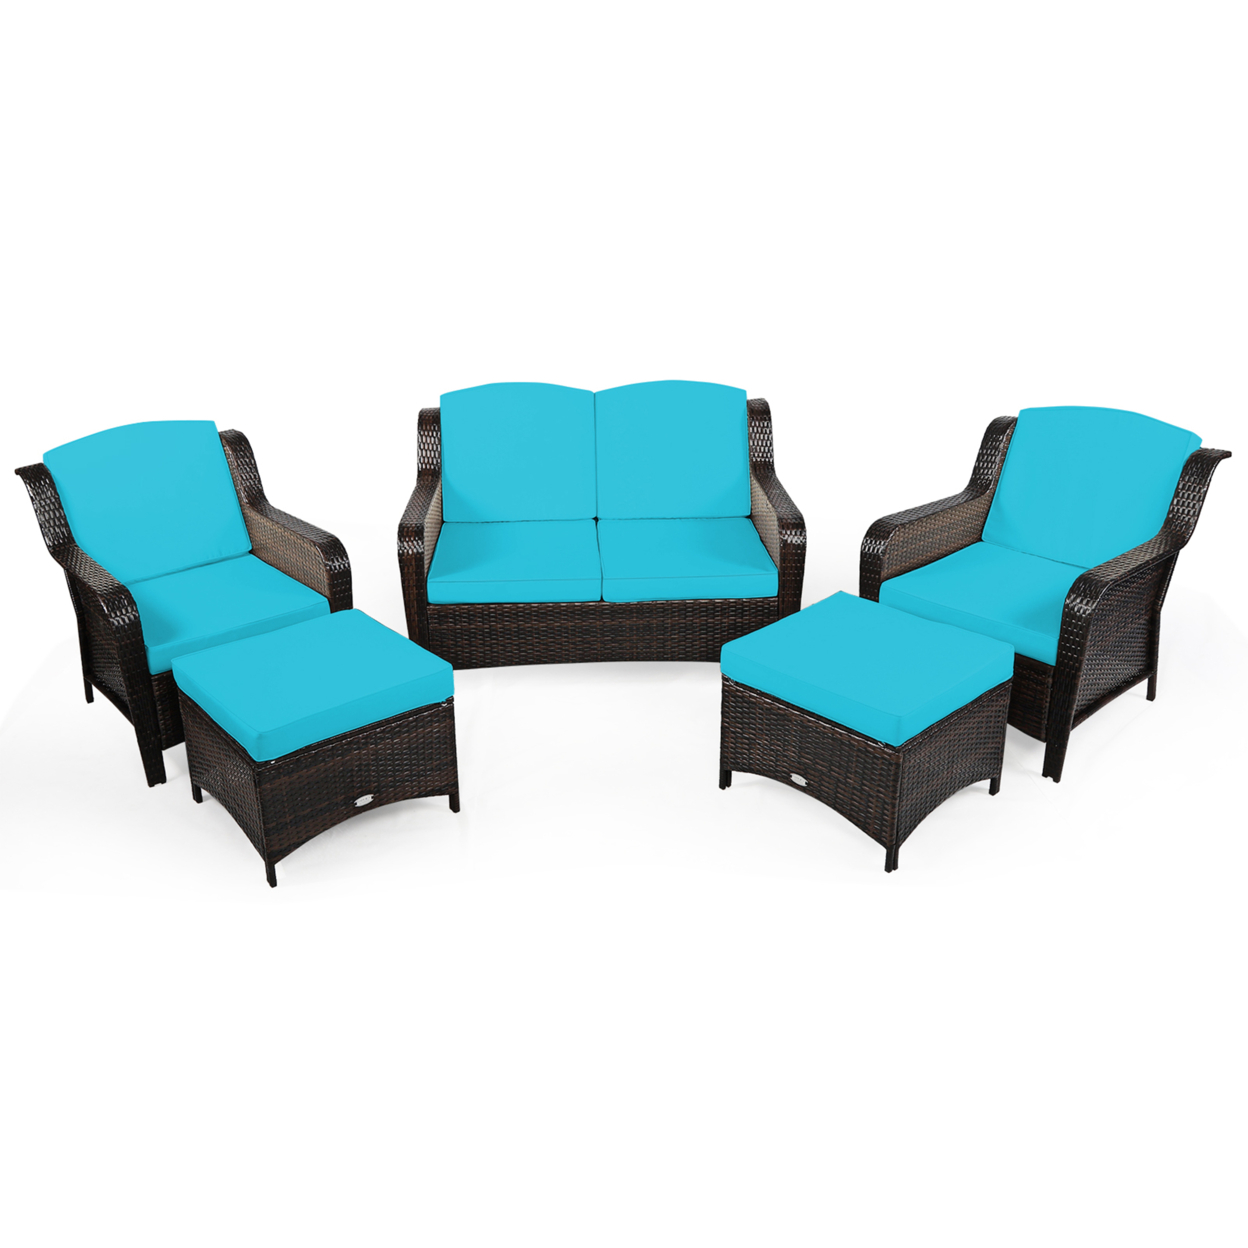 5PCS Rattan Patio Conversation Sofa Furniture Set Outdoor W/ Turquoise Cushions